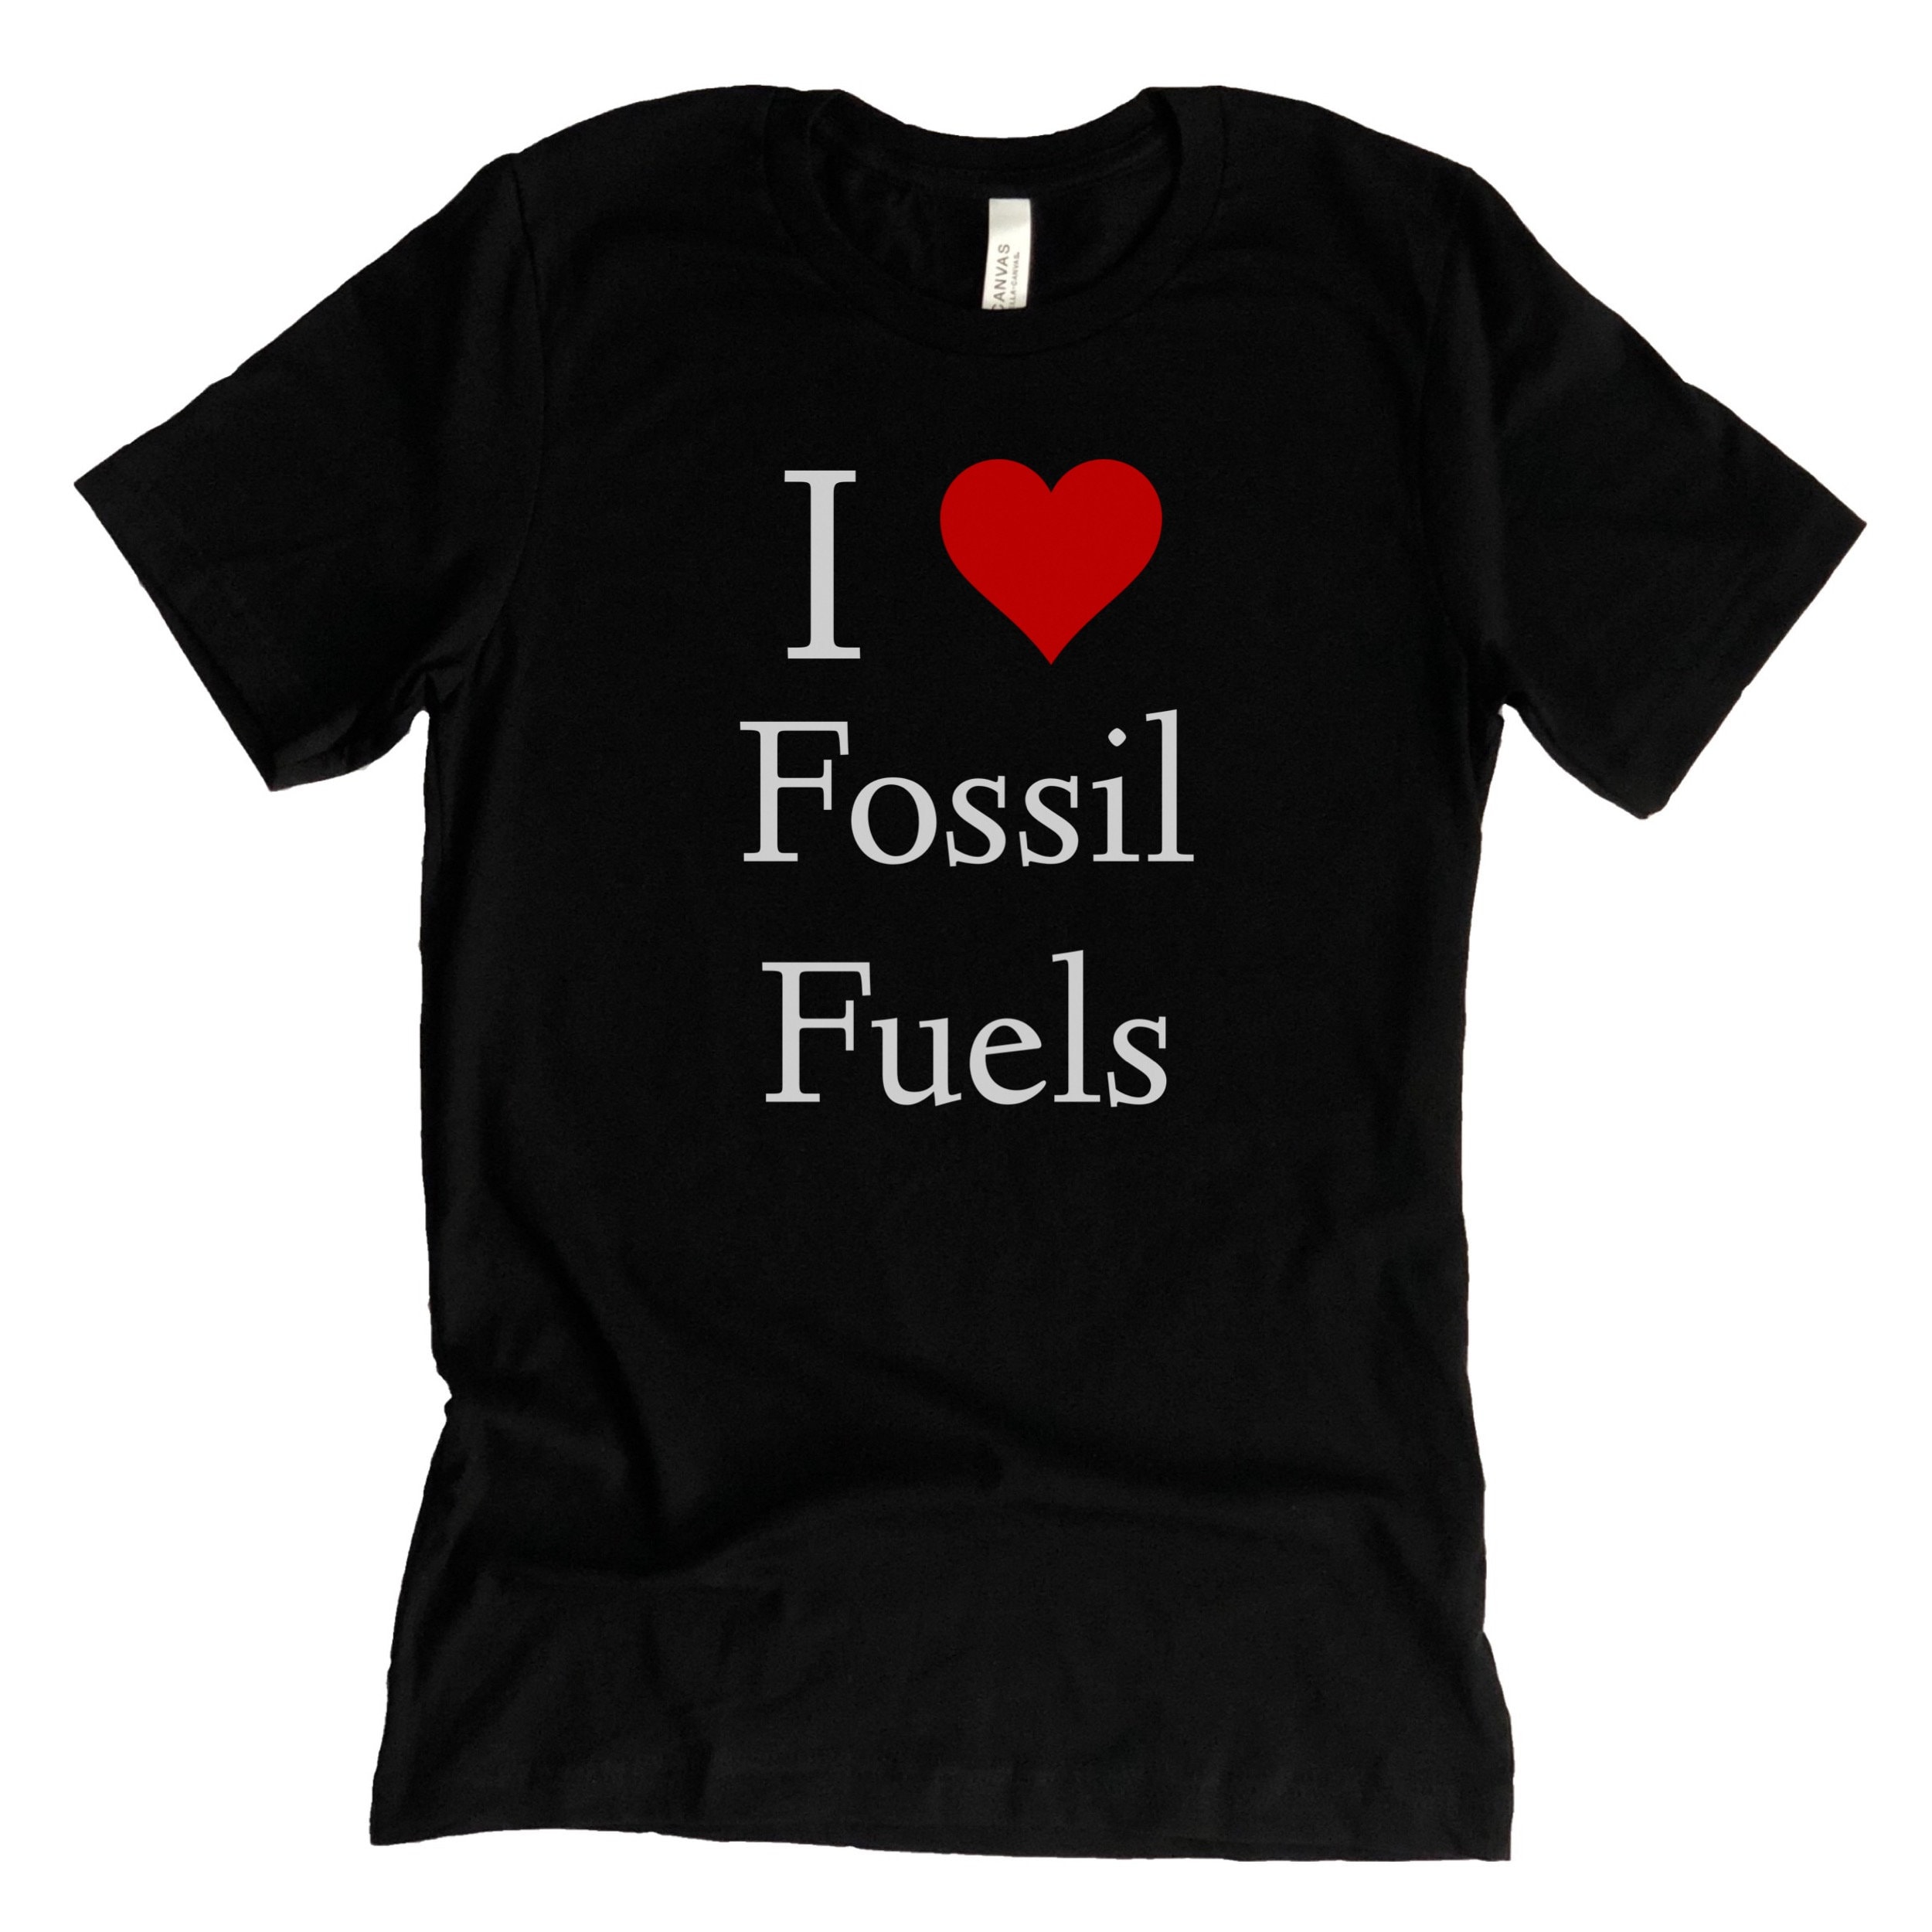 I love fossil fuels Short-Sleeve Unisex T-Shirt funny | Etsy